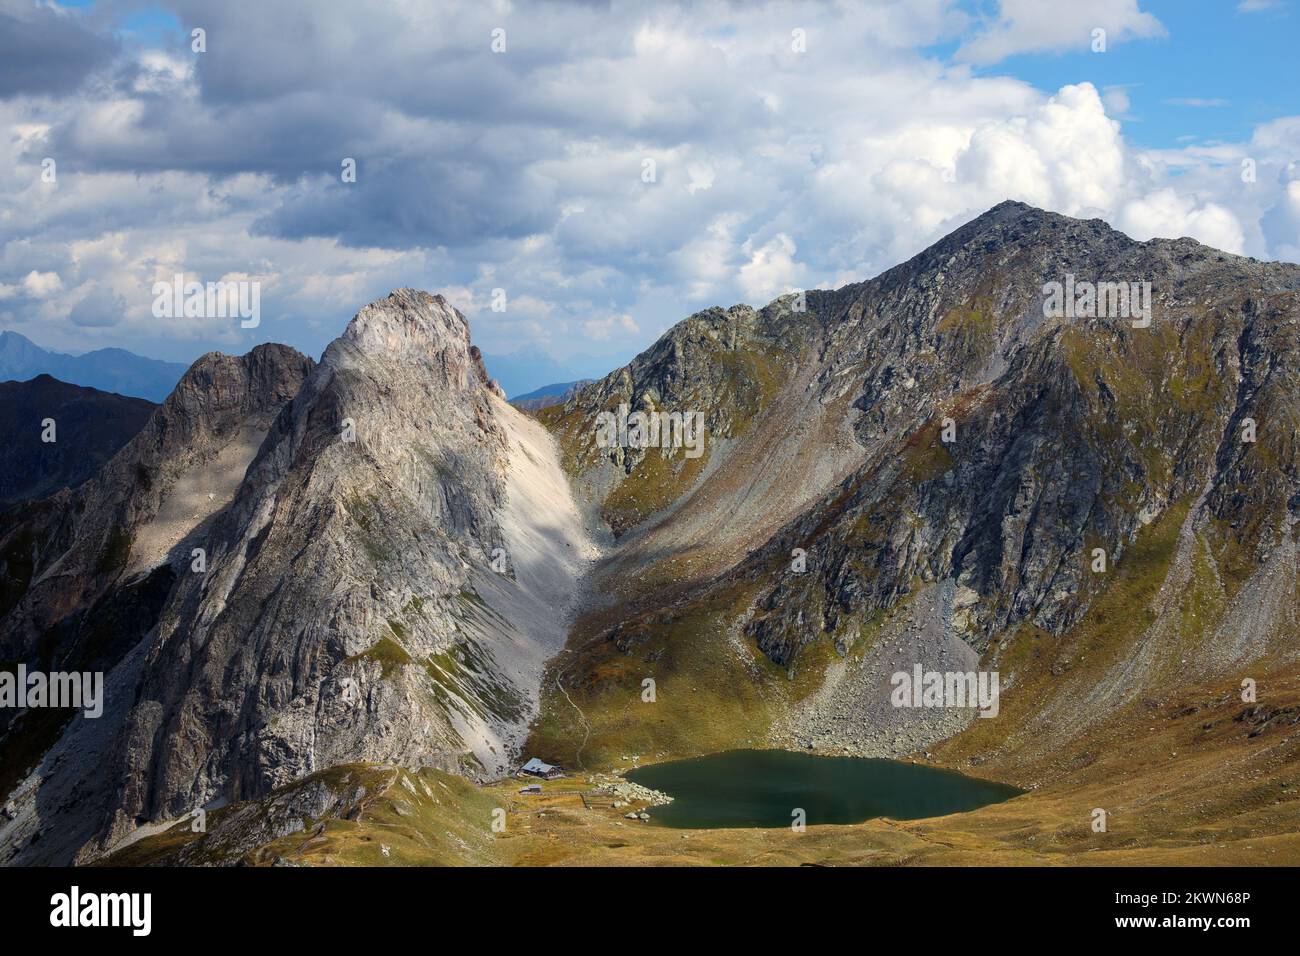 Obstansersee Hütte (refuge), Alpine lake. Rosskopf mountain peak. Carnic trail. Austria. Europe. Stock Photo